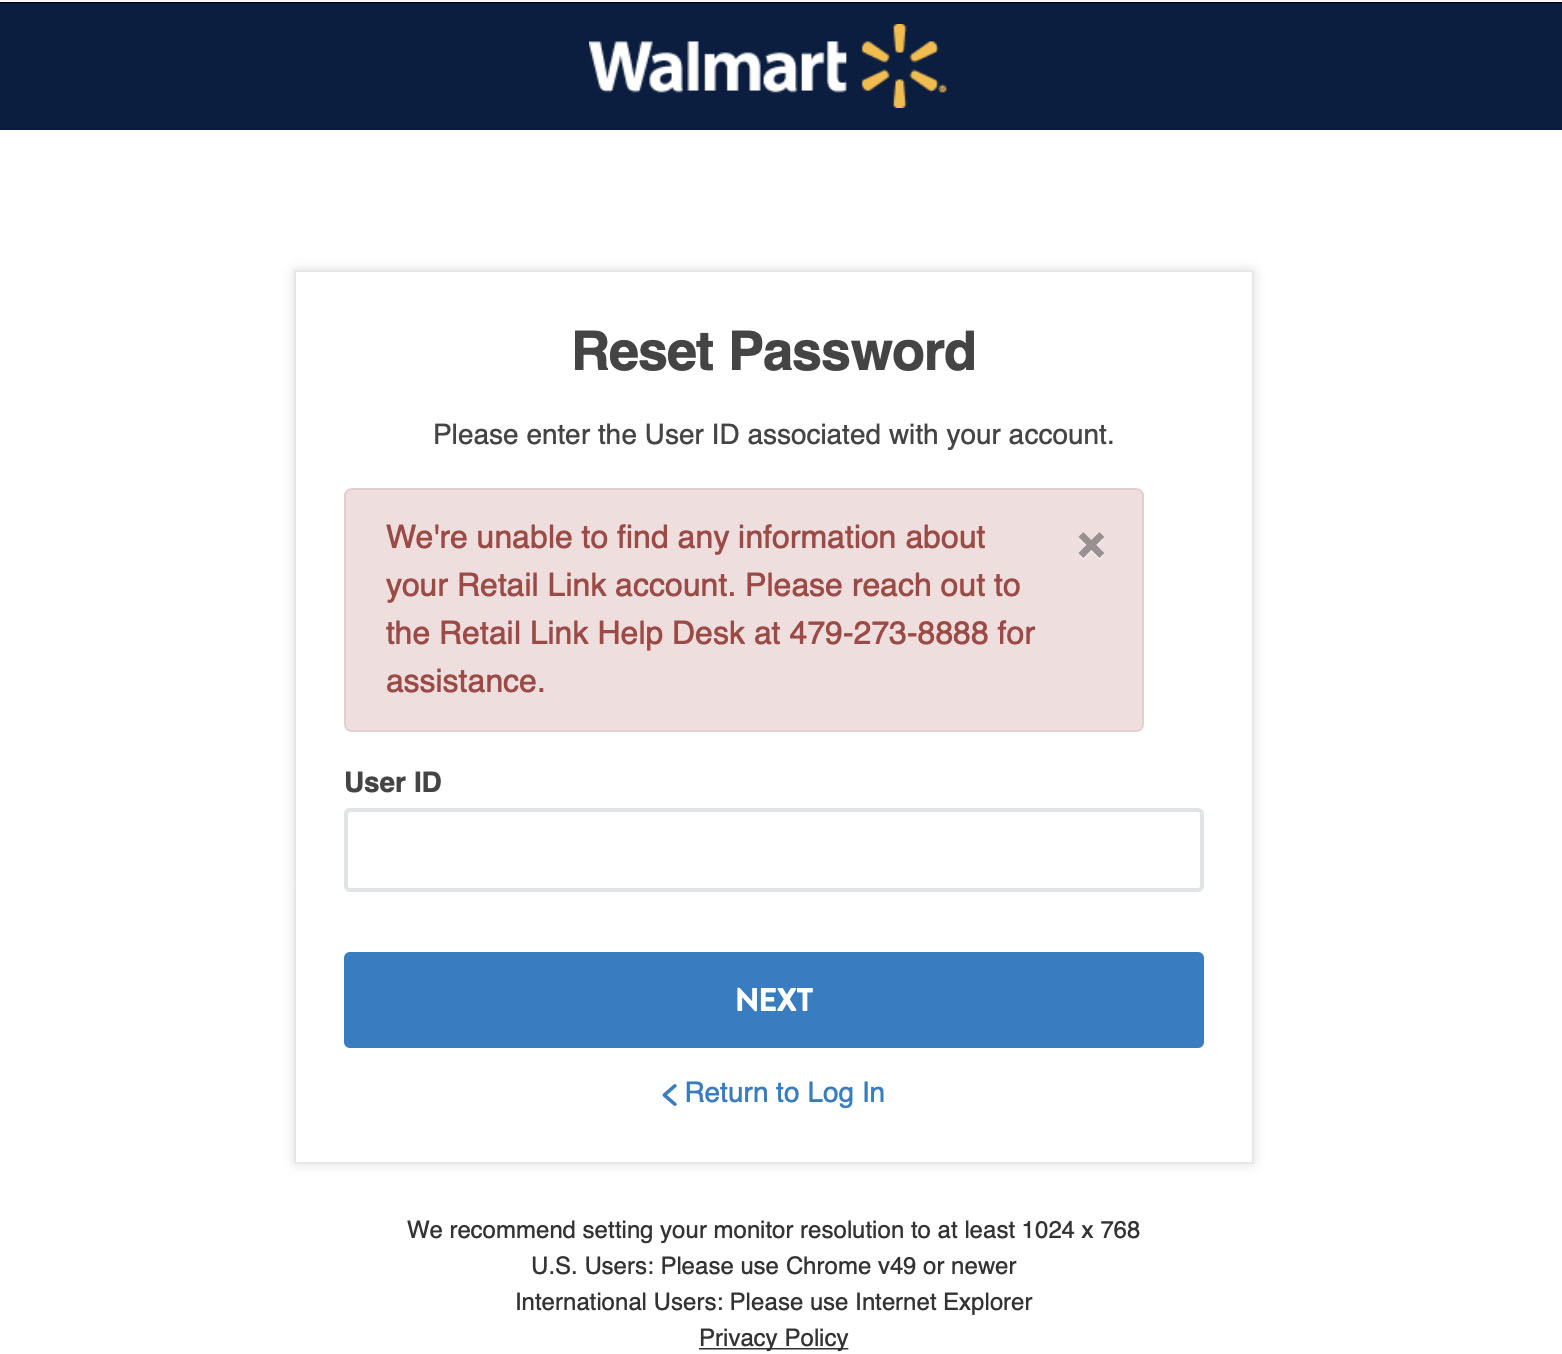 Walmart DSV Login Issue GeekSeller Support Team